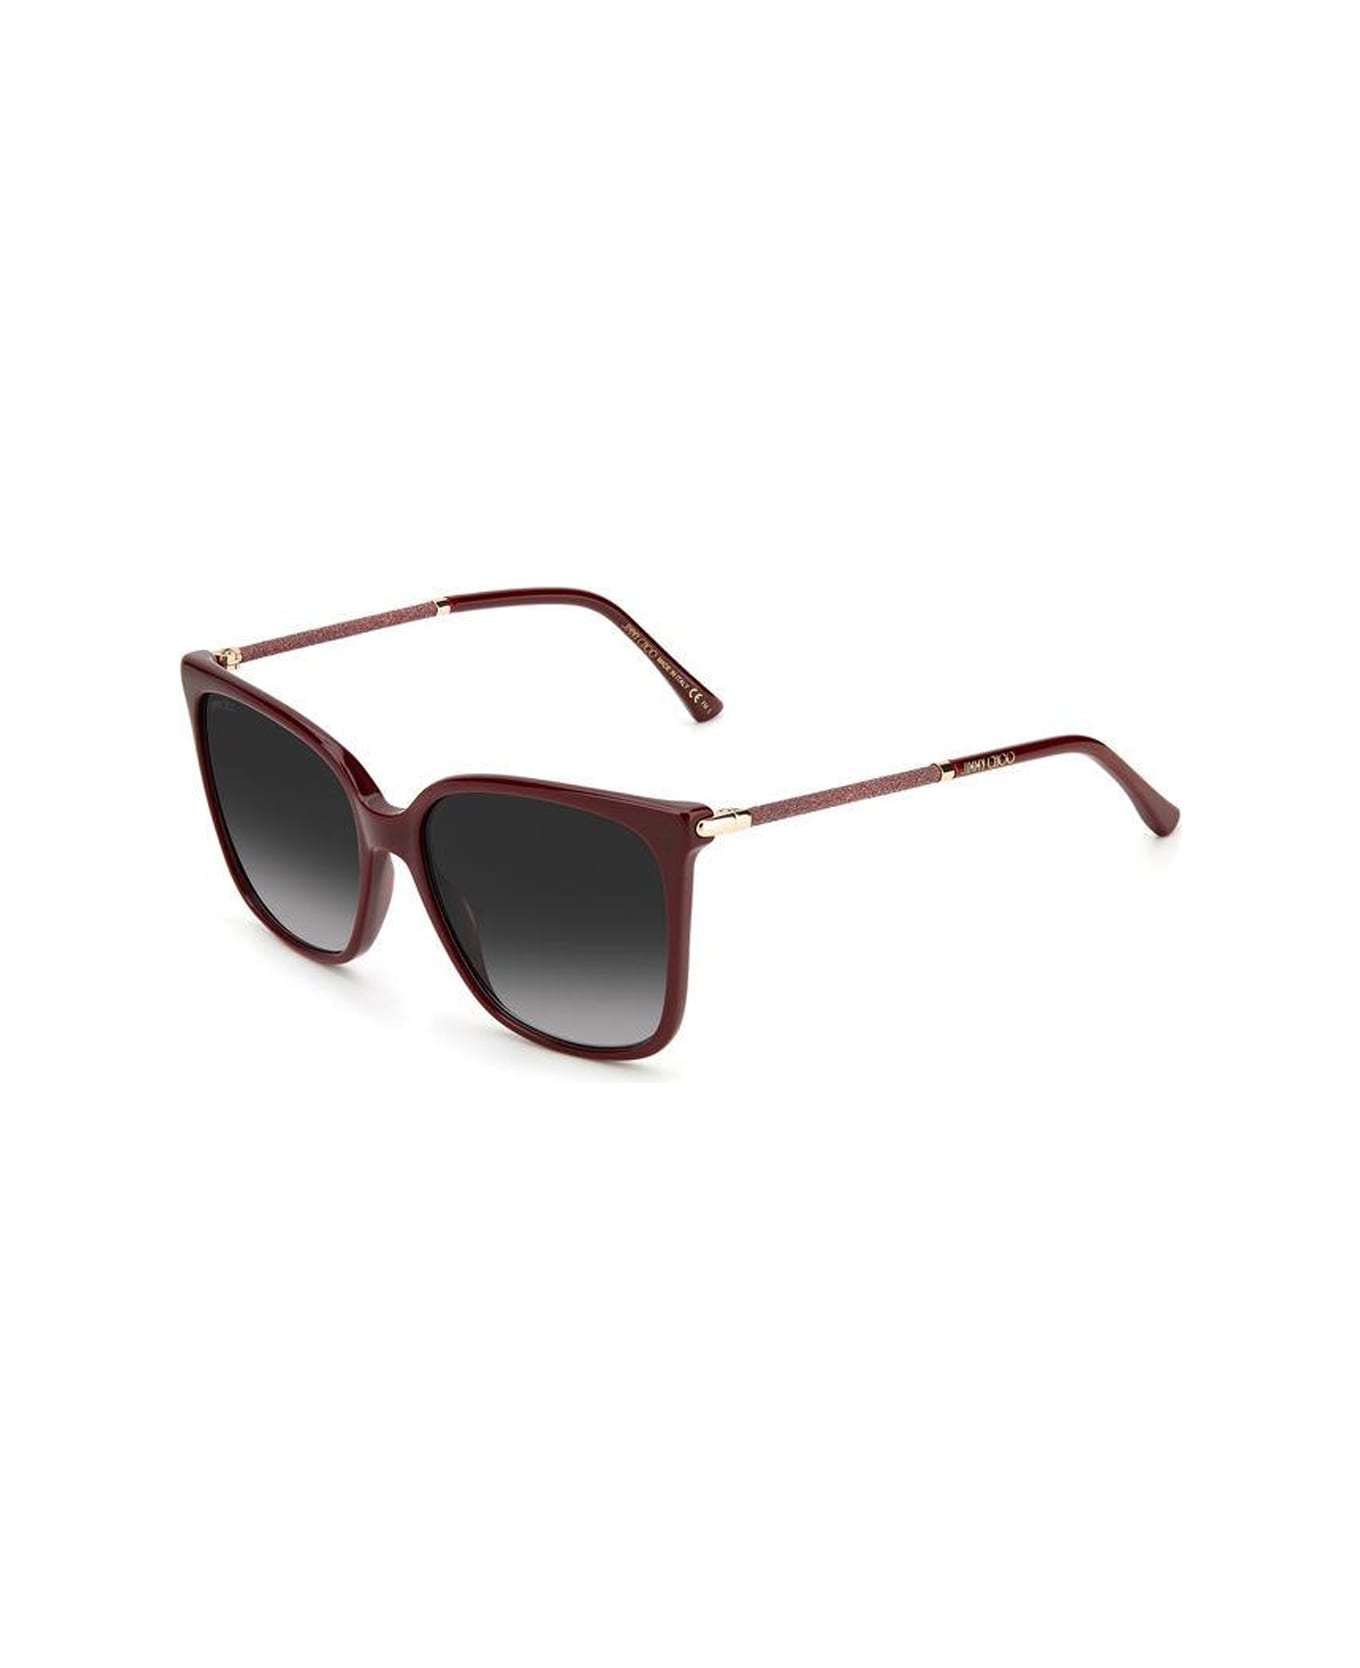 Jimmy Choo Eyewear Scilla/s Sunglasses - Rosso サングラス